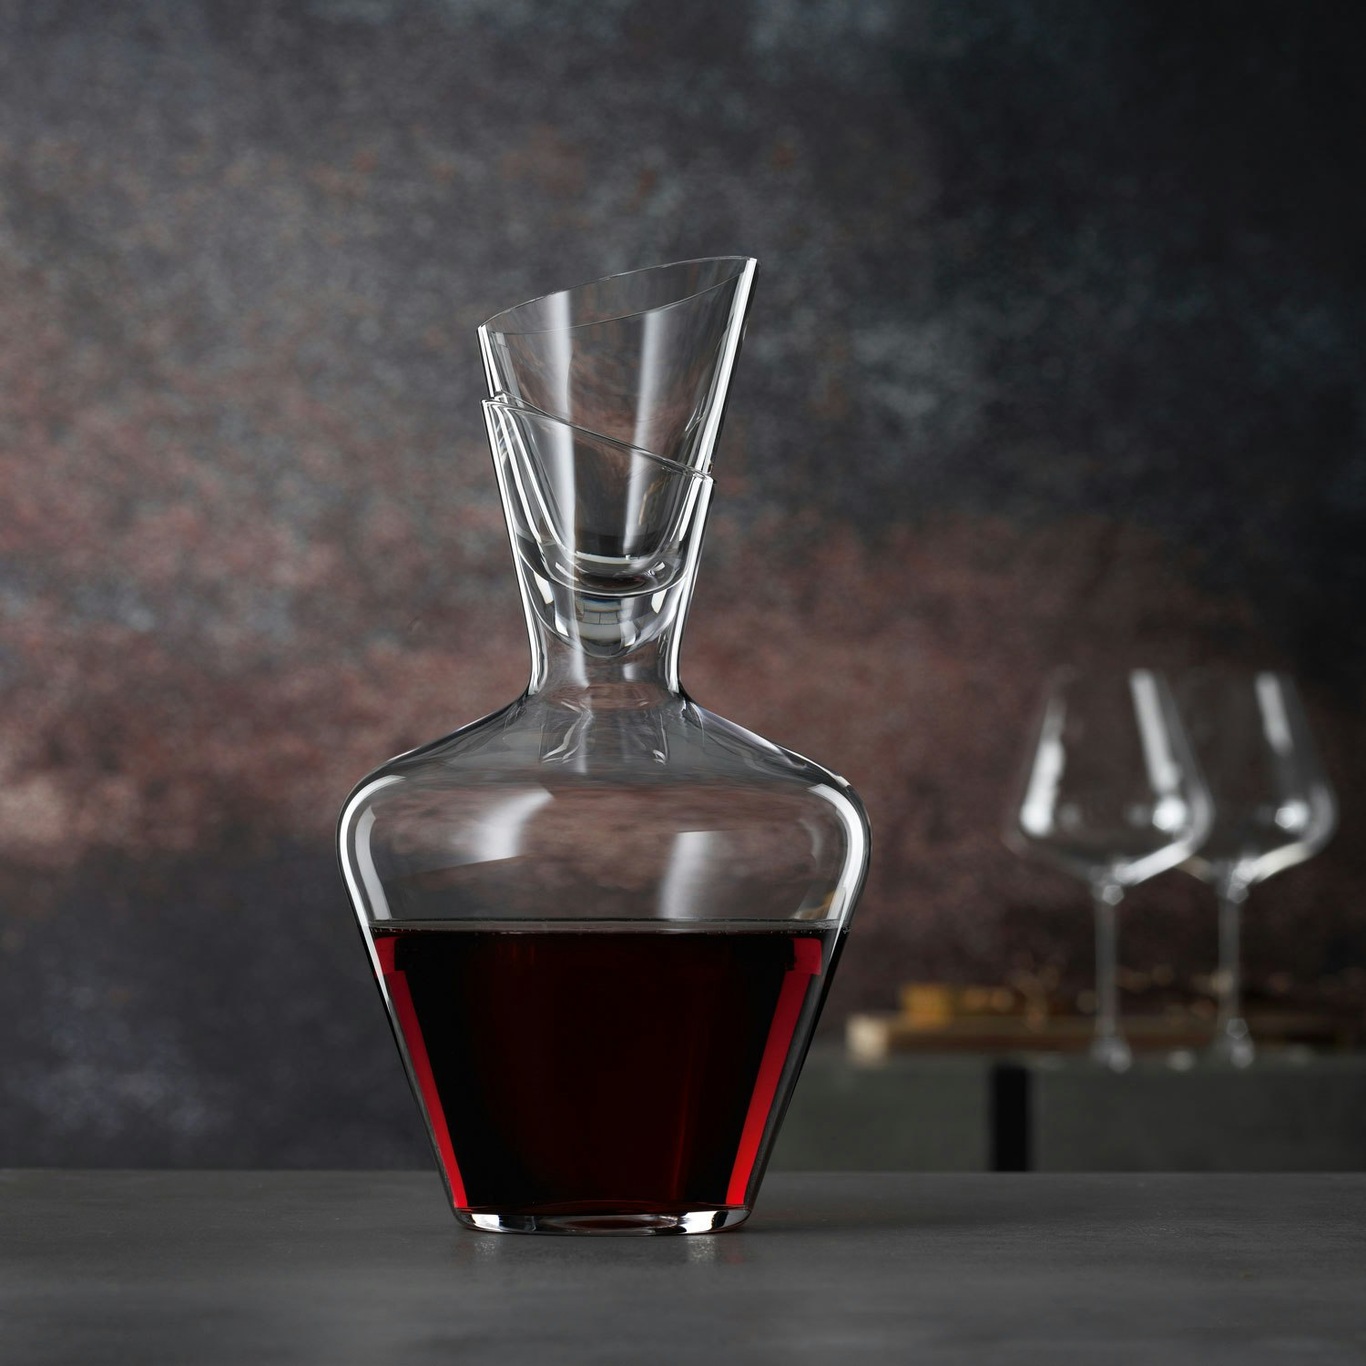 https://royaldesign.com/image/2/spiegelau-definition-wine-carafe-1-l-1?w=800&quality=80